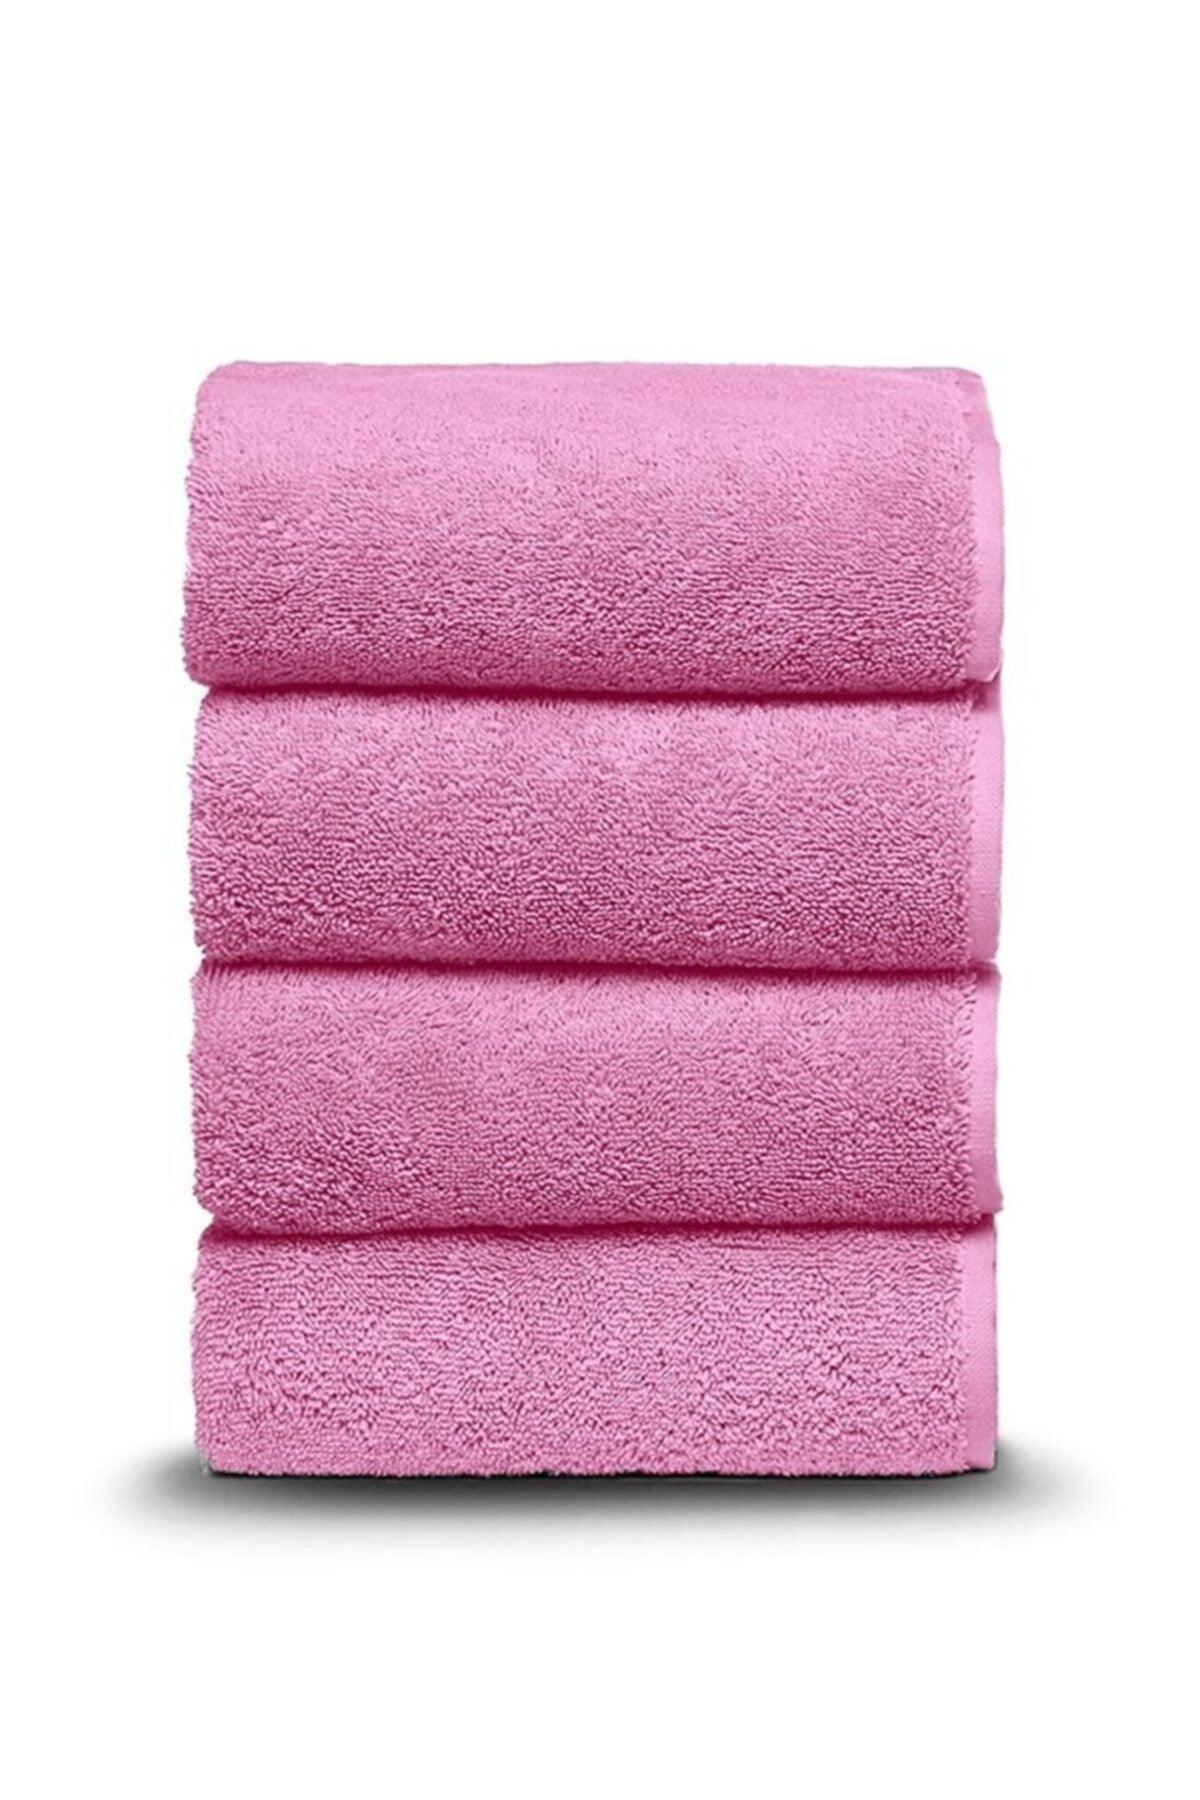 Bath Towel Set Hand Face Towel 4 Pieces Extra Soft Towel Set 50x90 Cm Pink - Swordslife